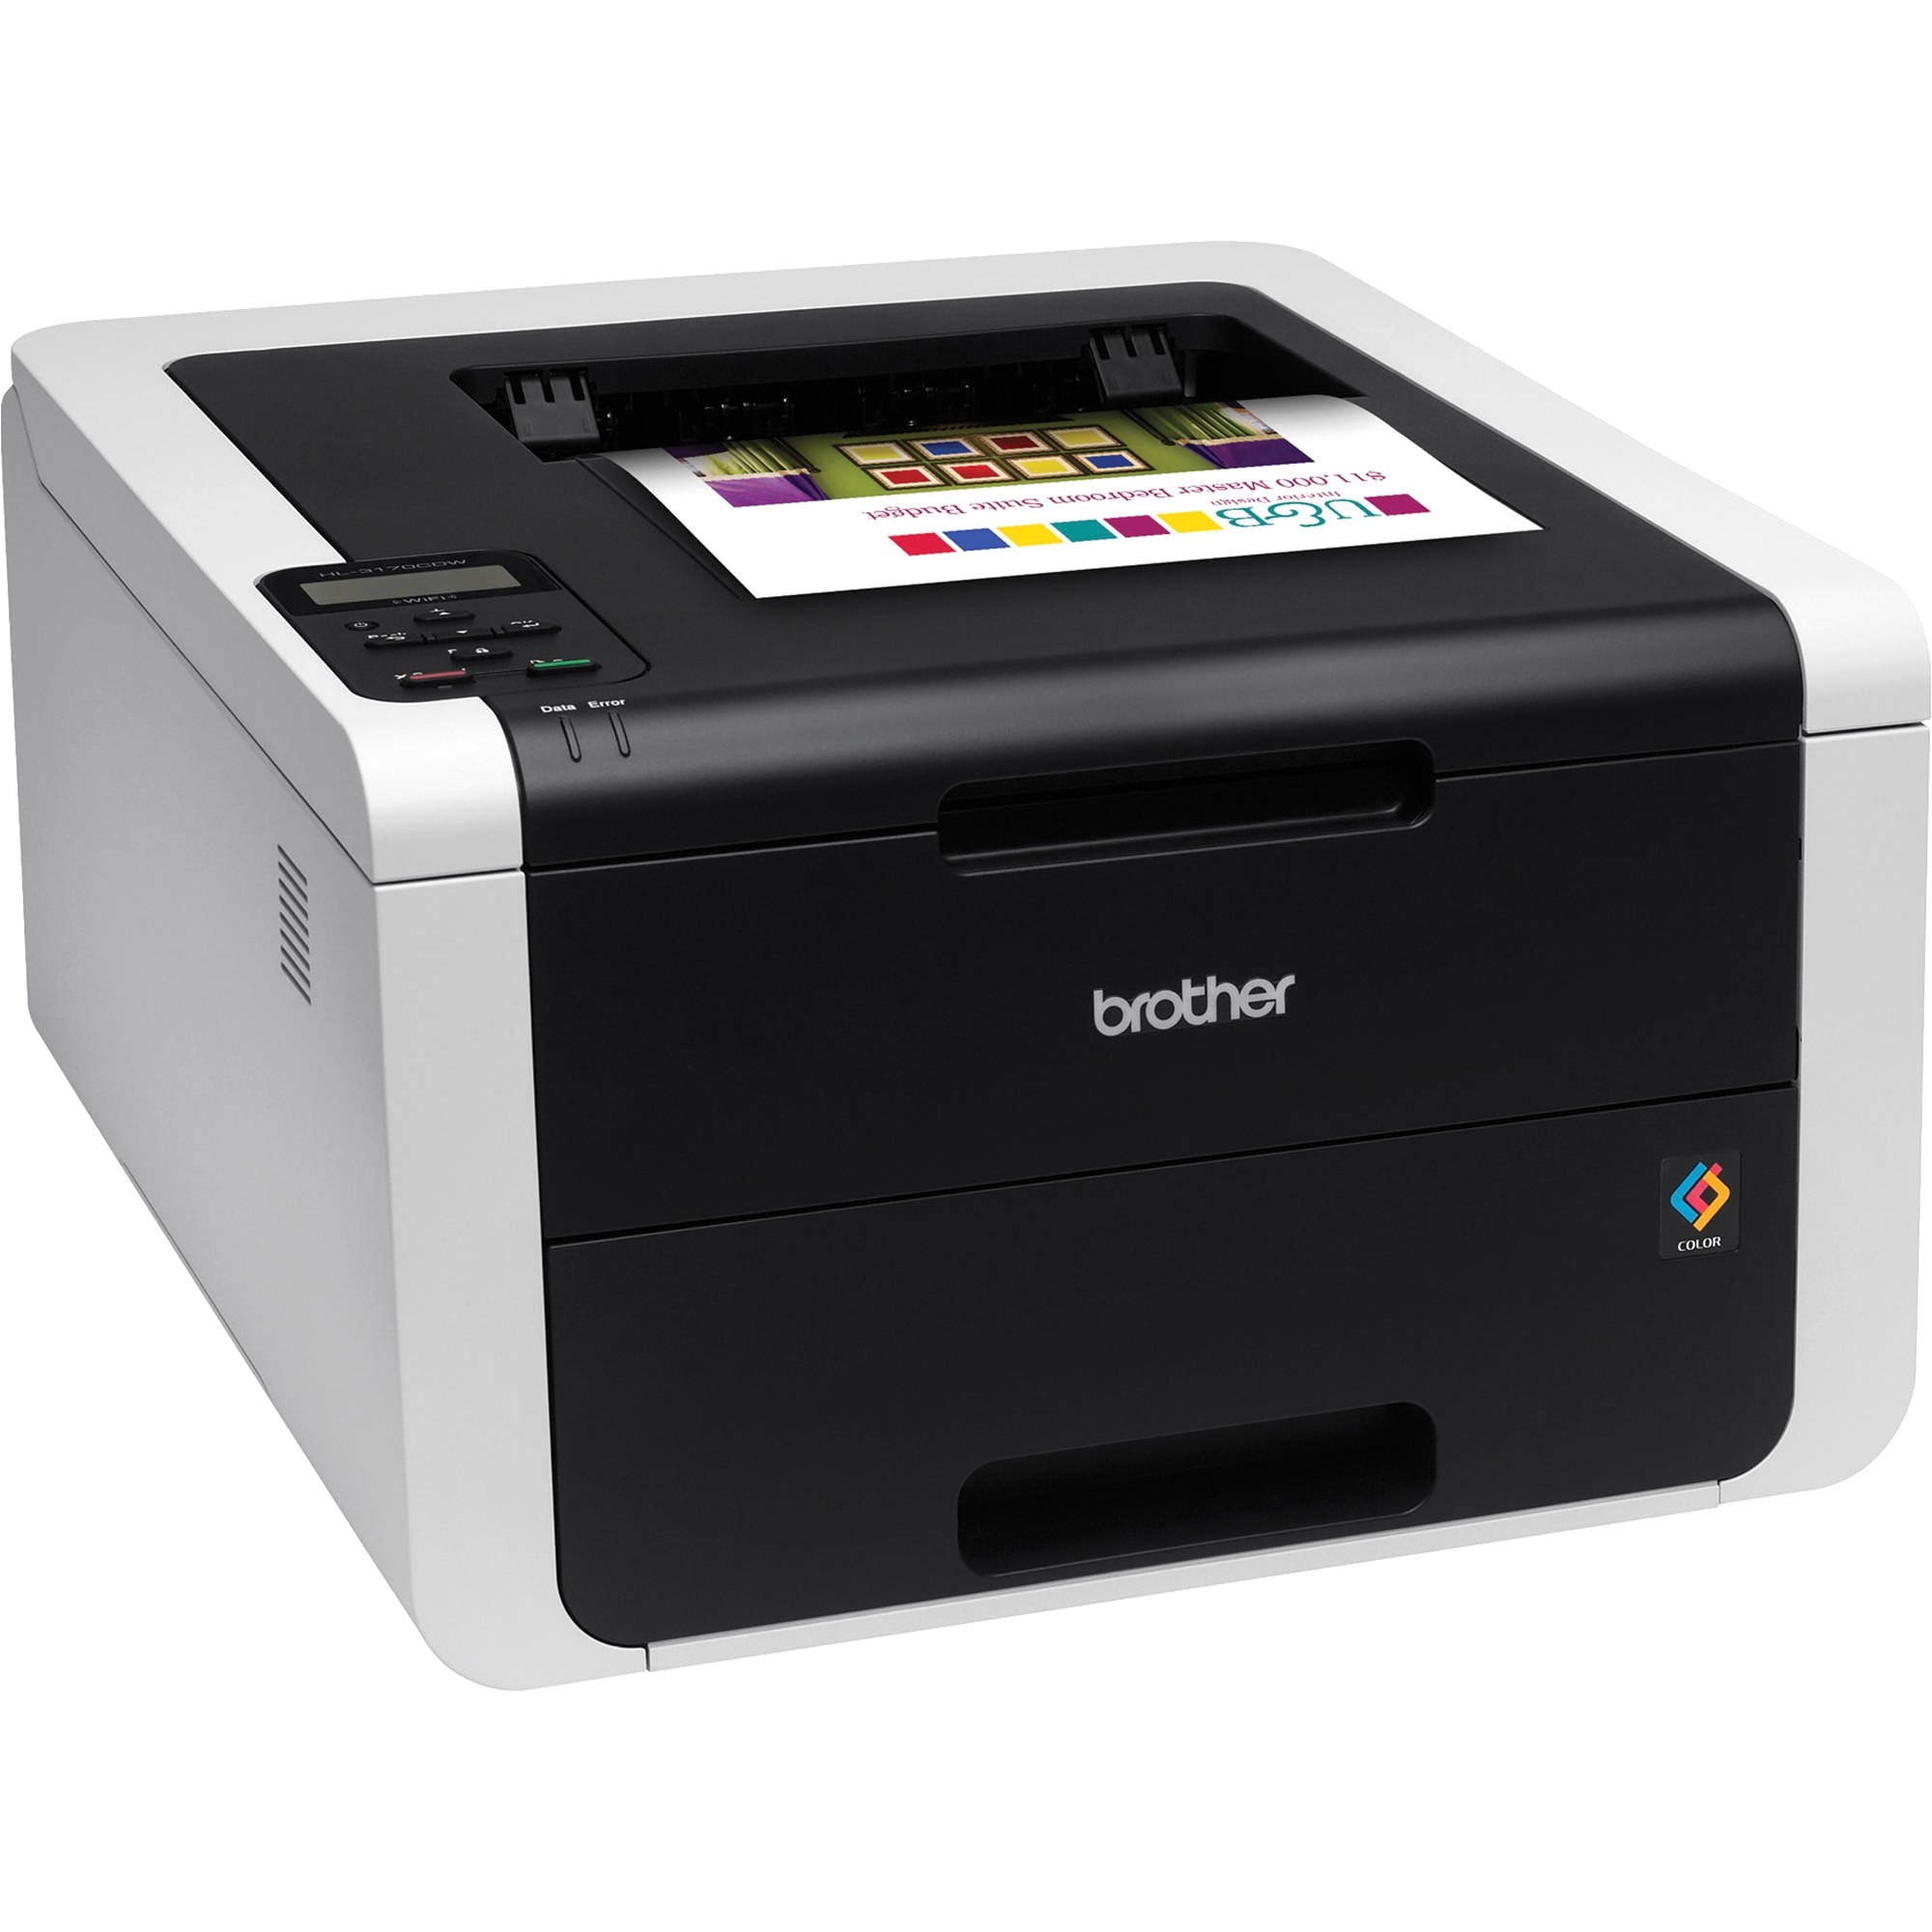 canon business card printing machine